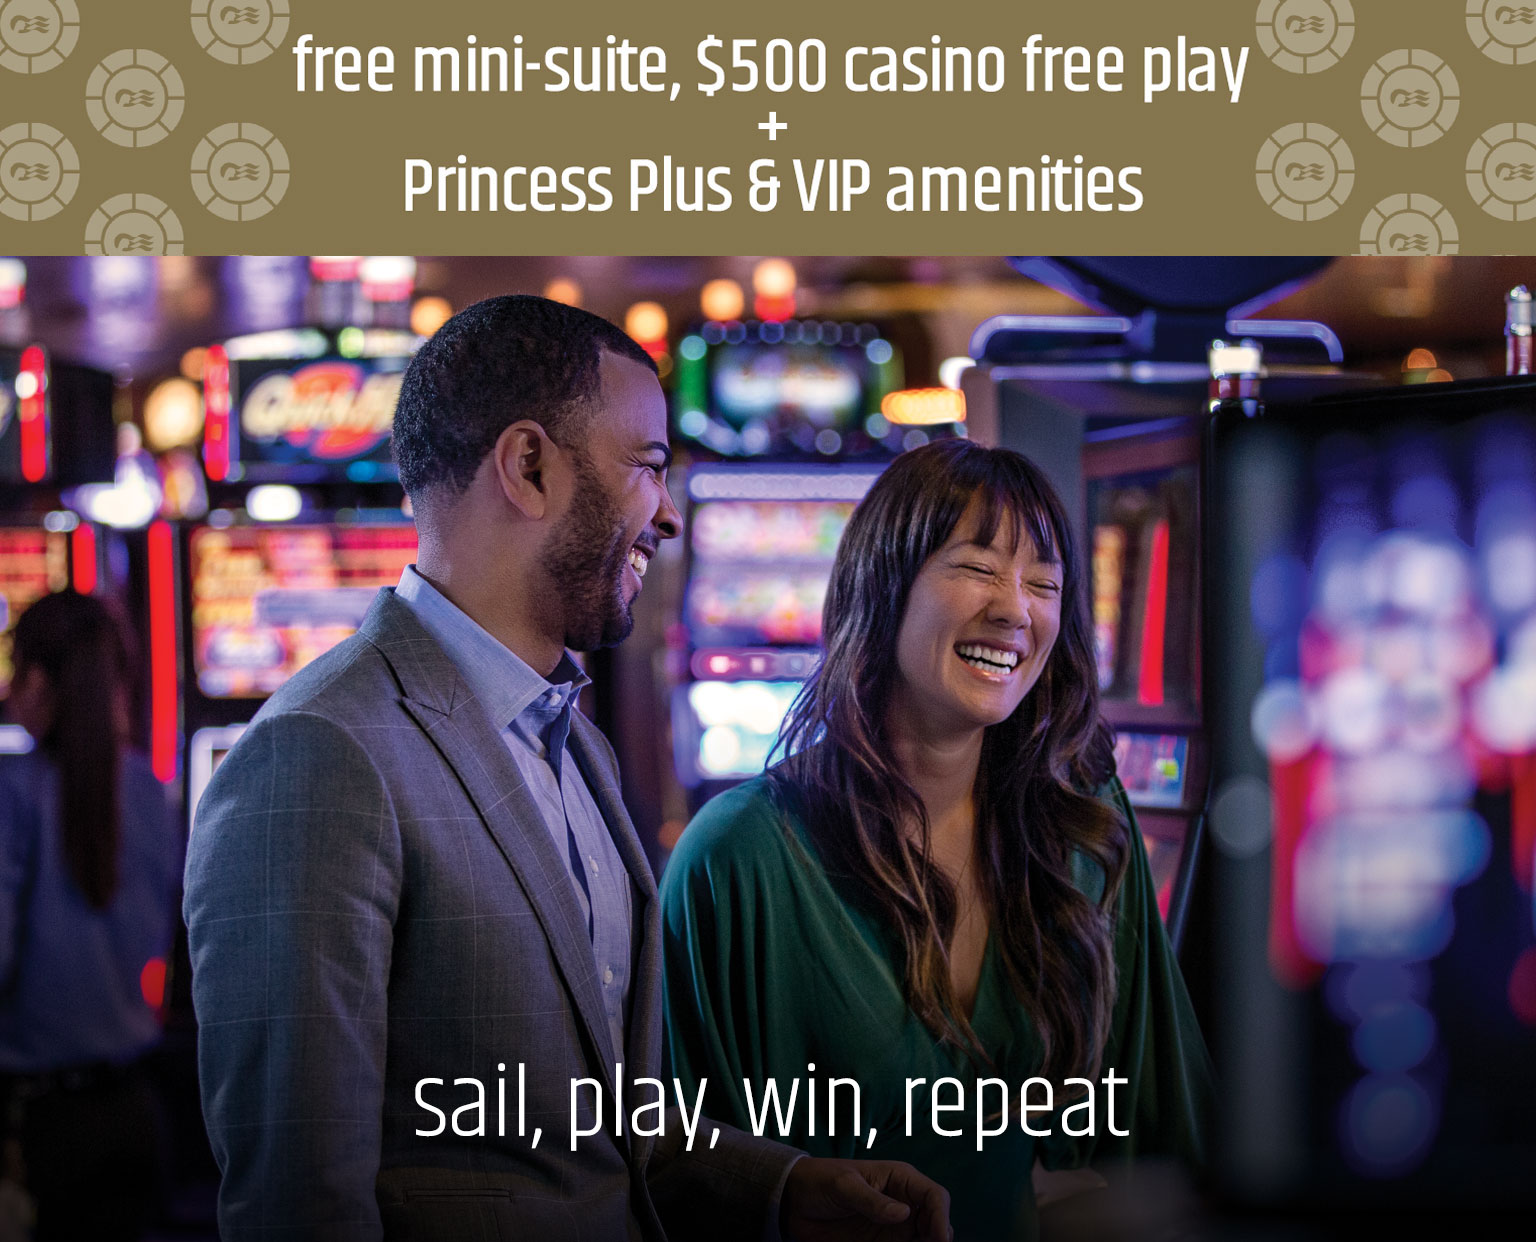 free mini-suite, $500 casino free play & VIP amenities - Sail, play, win, repeat